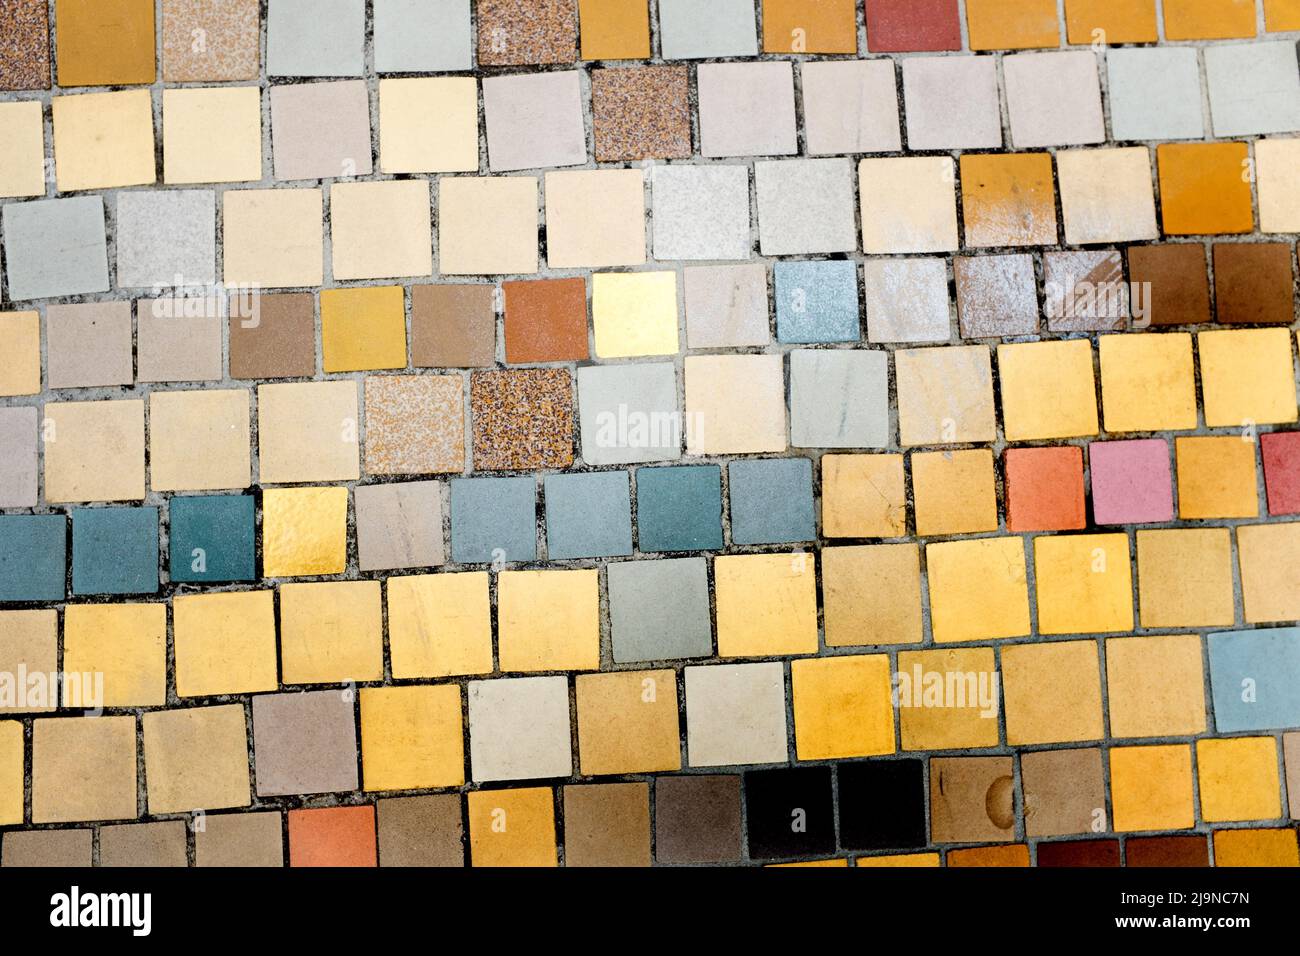 Mosaic pattern on a floor Stock Photo